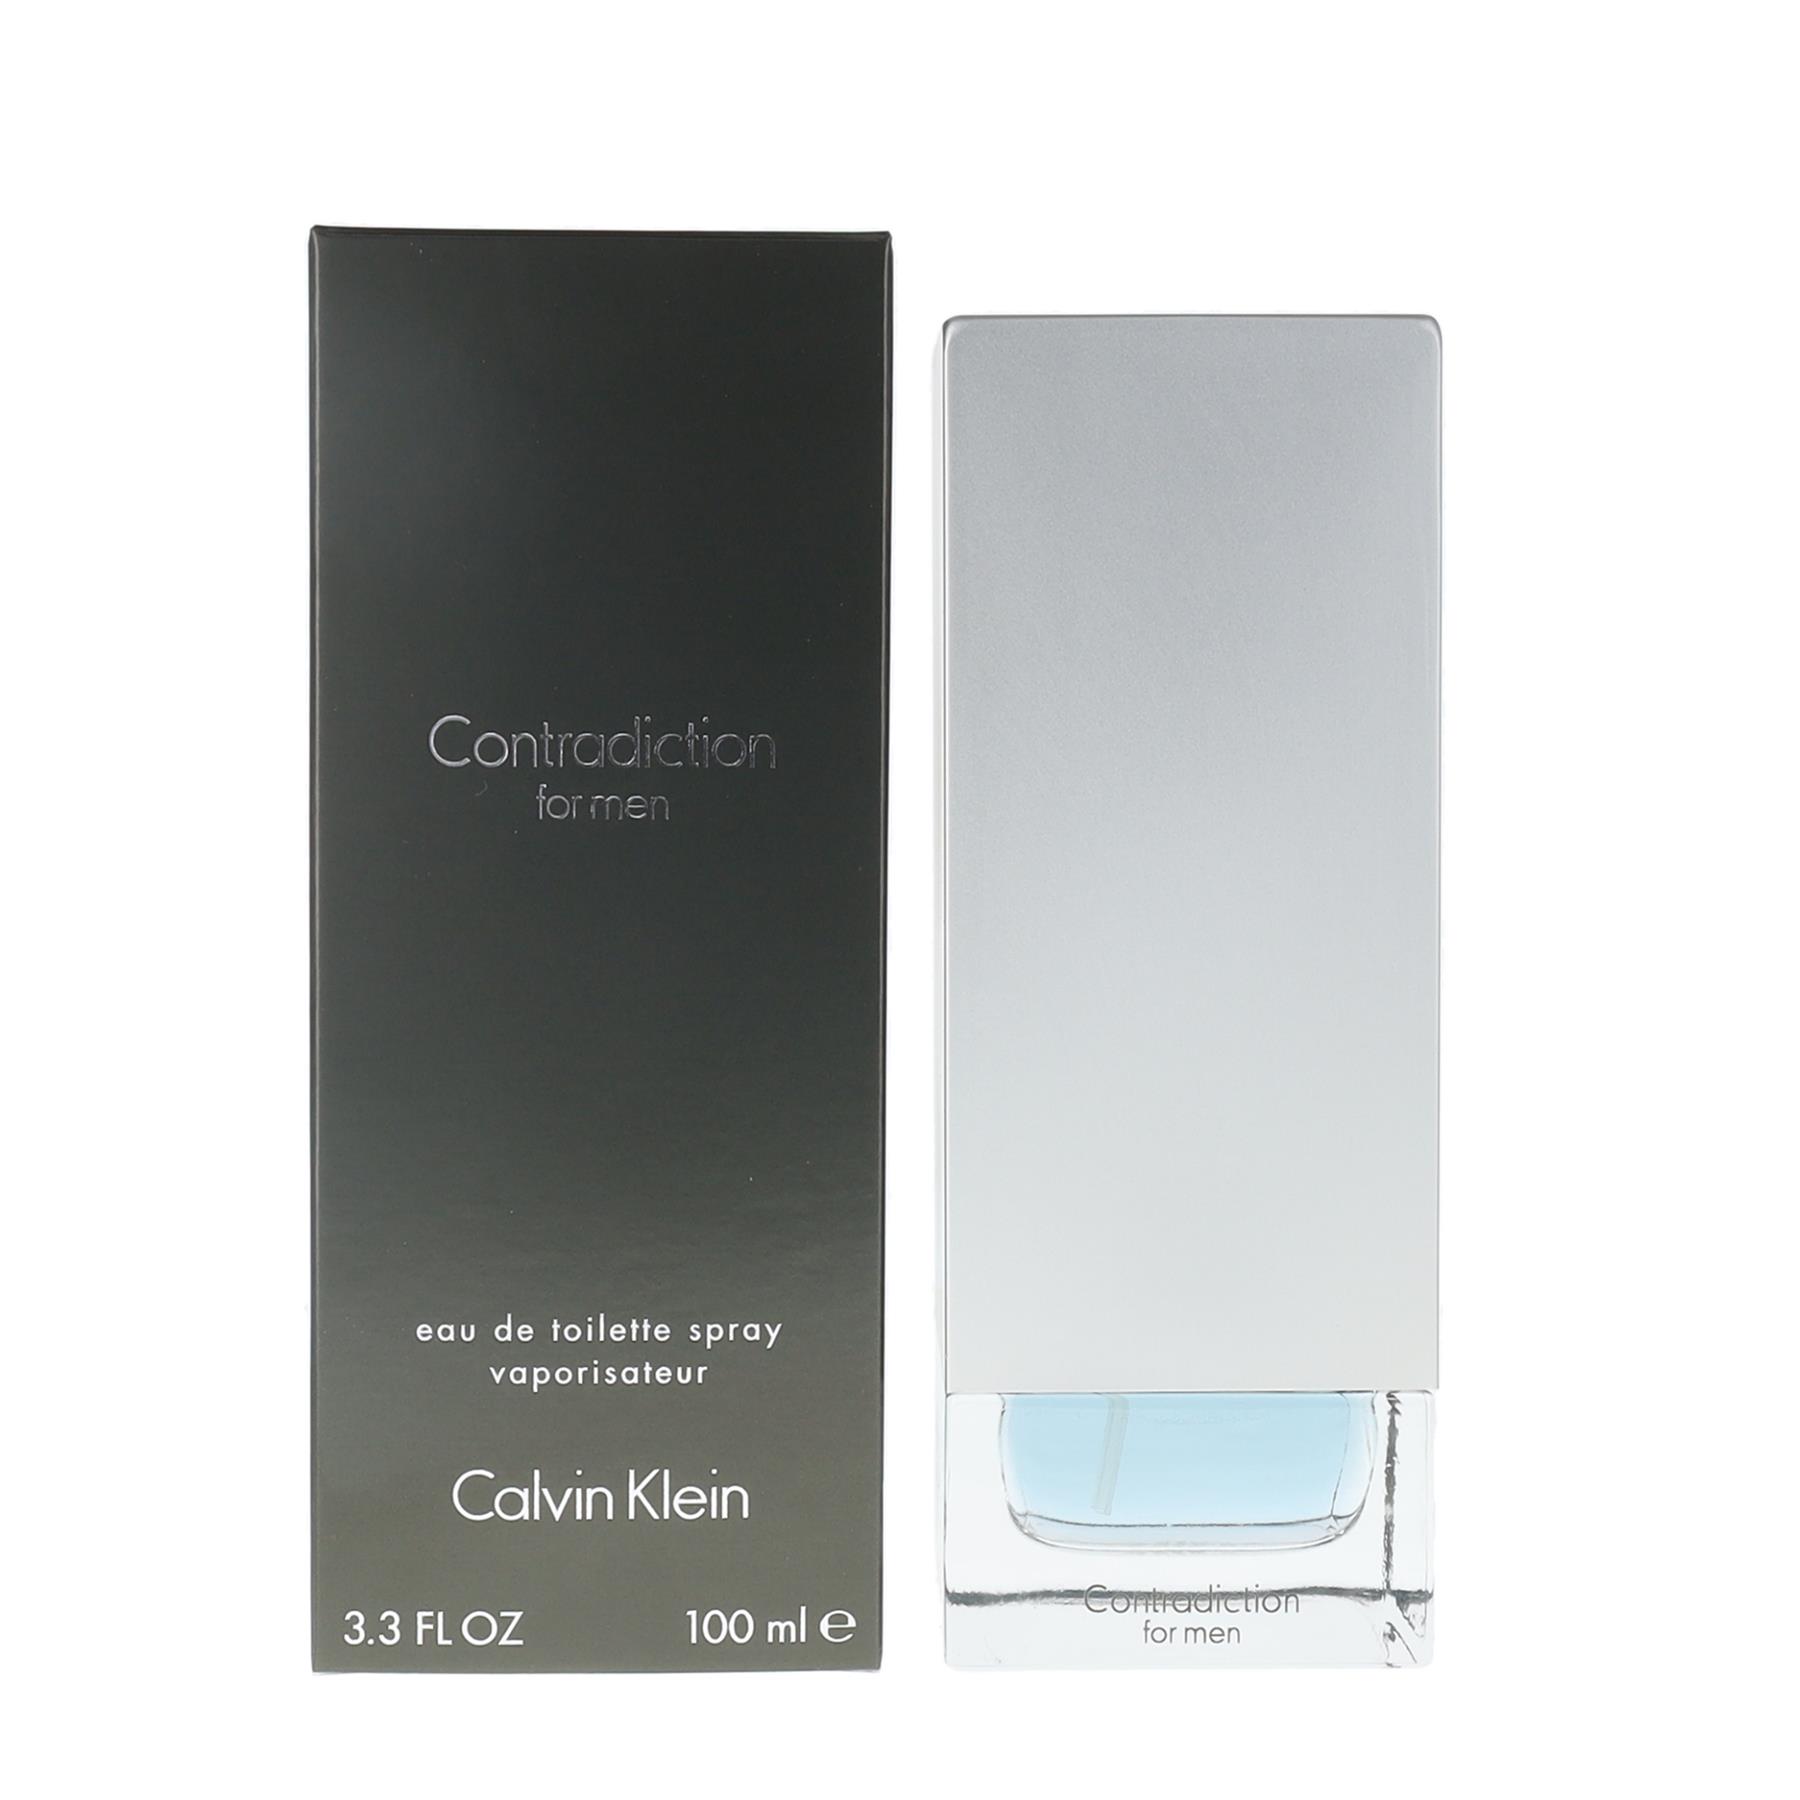 Calvin Klein Contradiction 100ml Eau de Toilette Spray for Him from Perfume Plus Direct